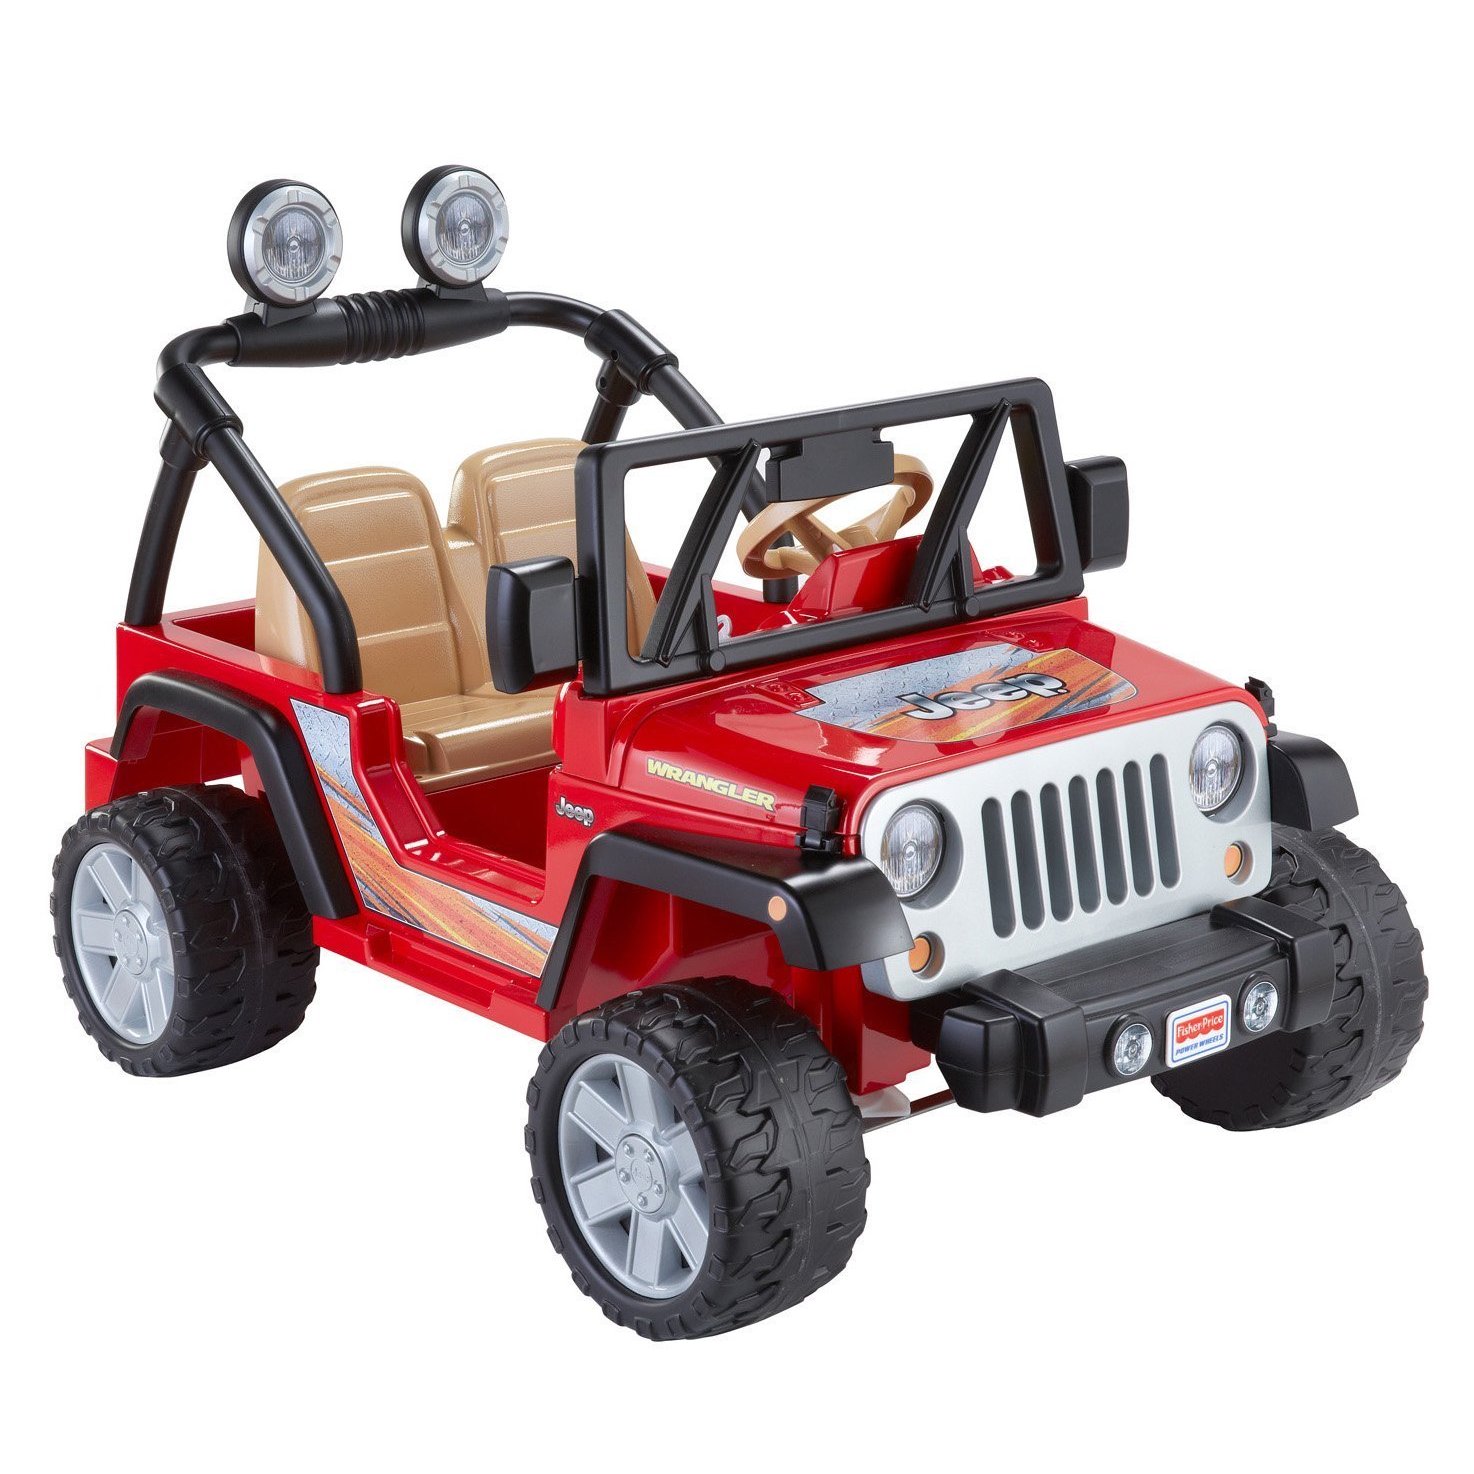 toy jeep price